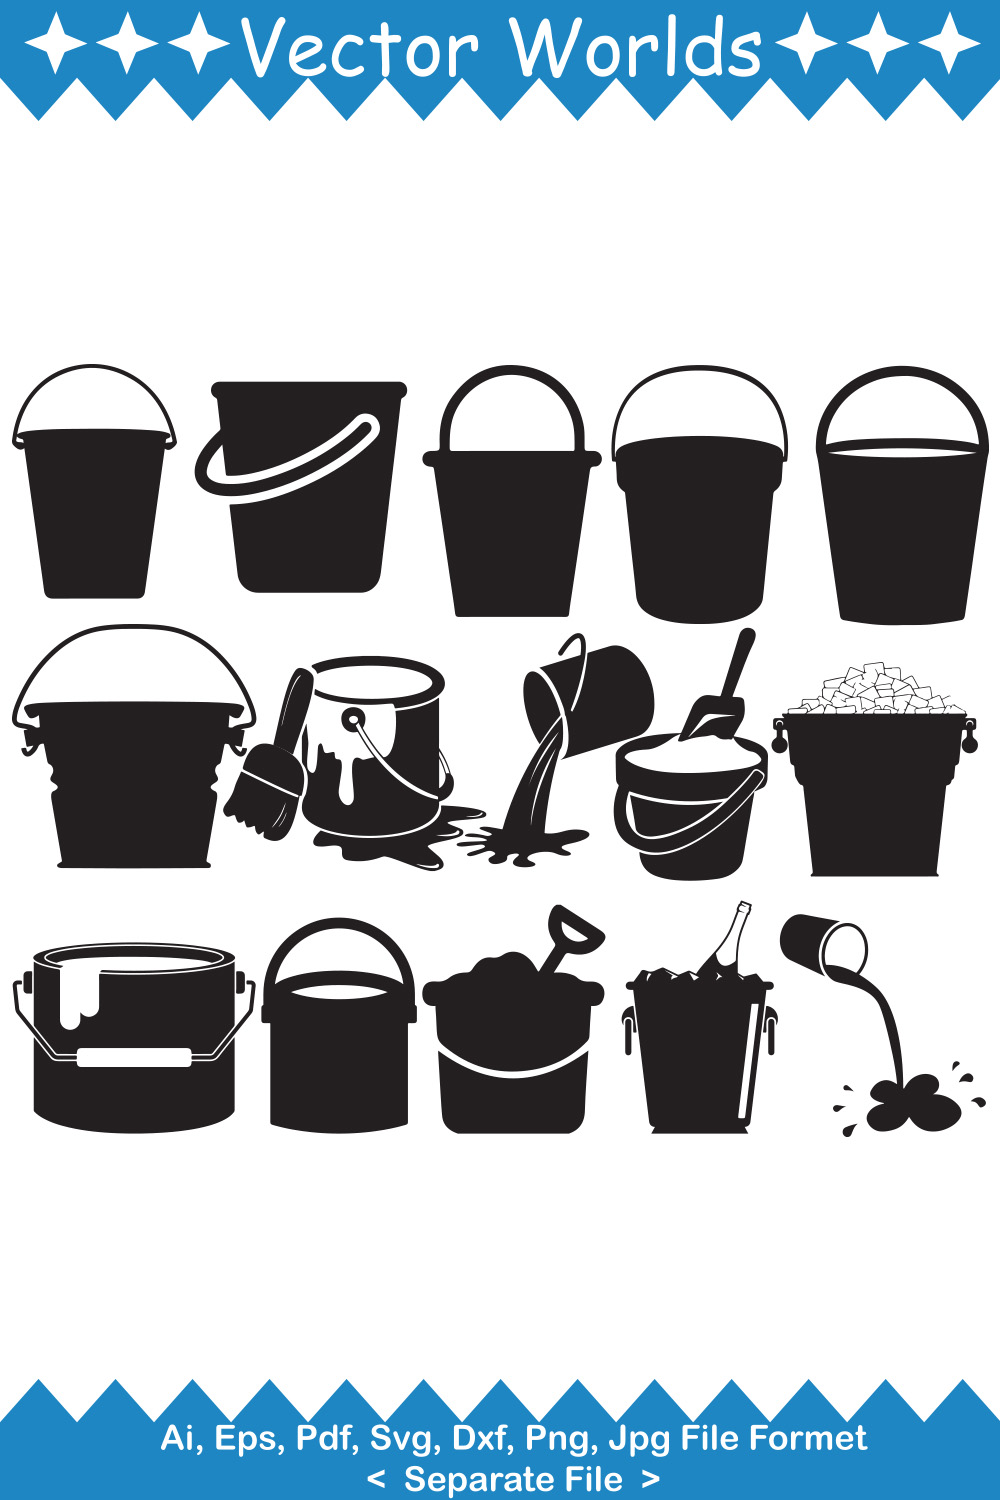 Bundle of vector unique images of bucket silhouettes.